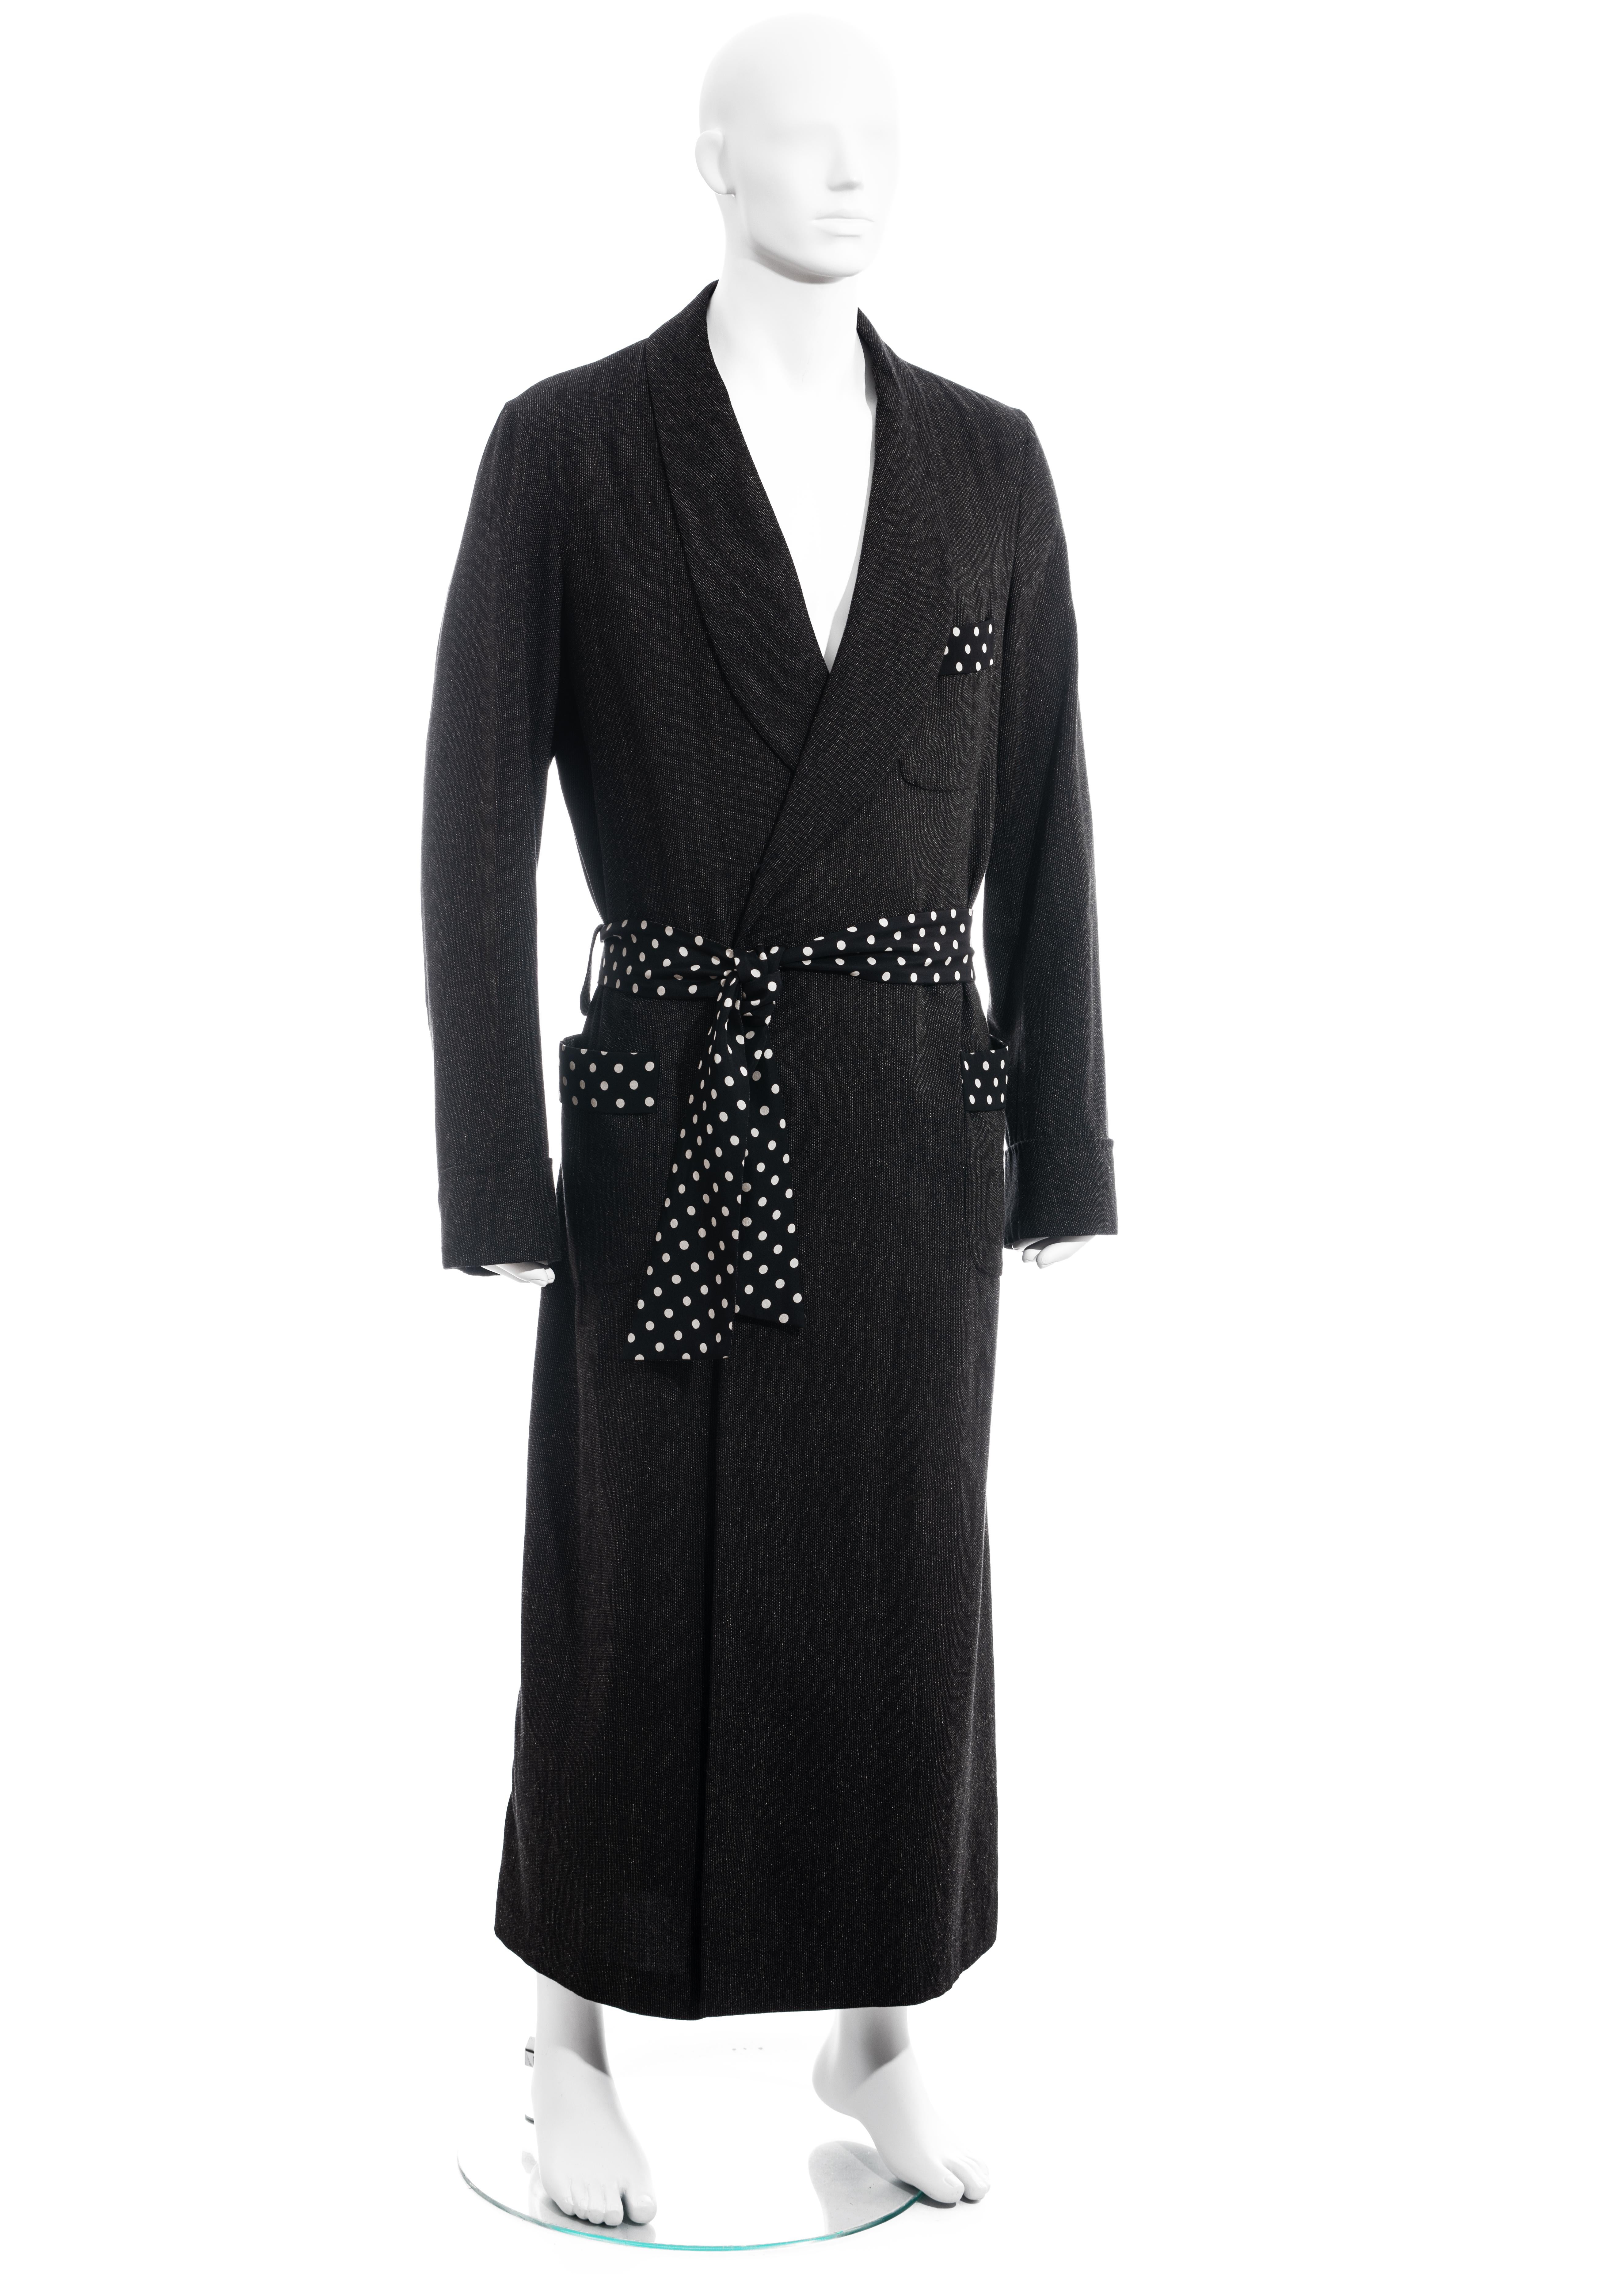 ▪ Yohji Yamamoto Pour Homme charcoal grey evening robe 
▪ 80% Wool, 20% Silk 
▪ Snap button closures 
▪ Polkadot belt and pockets 
▪ 100% Silk lining 
▪ JP 3 - Large
▪ Fall-Winter 2009